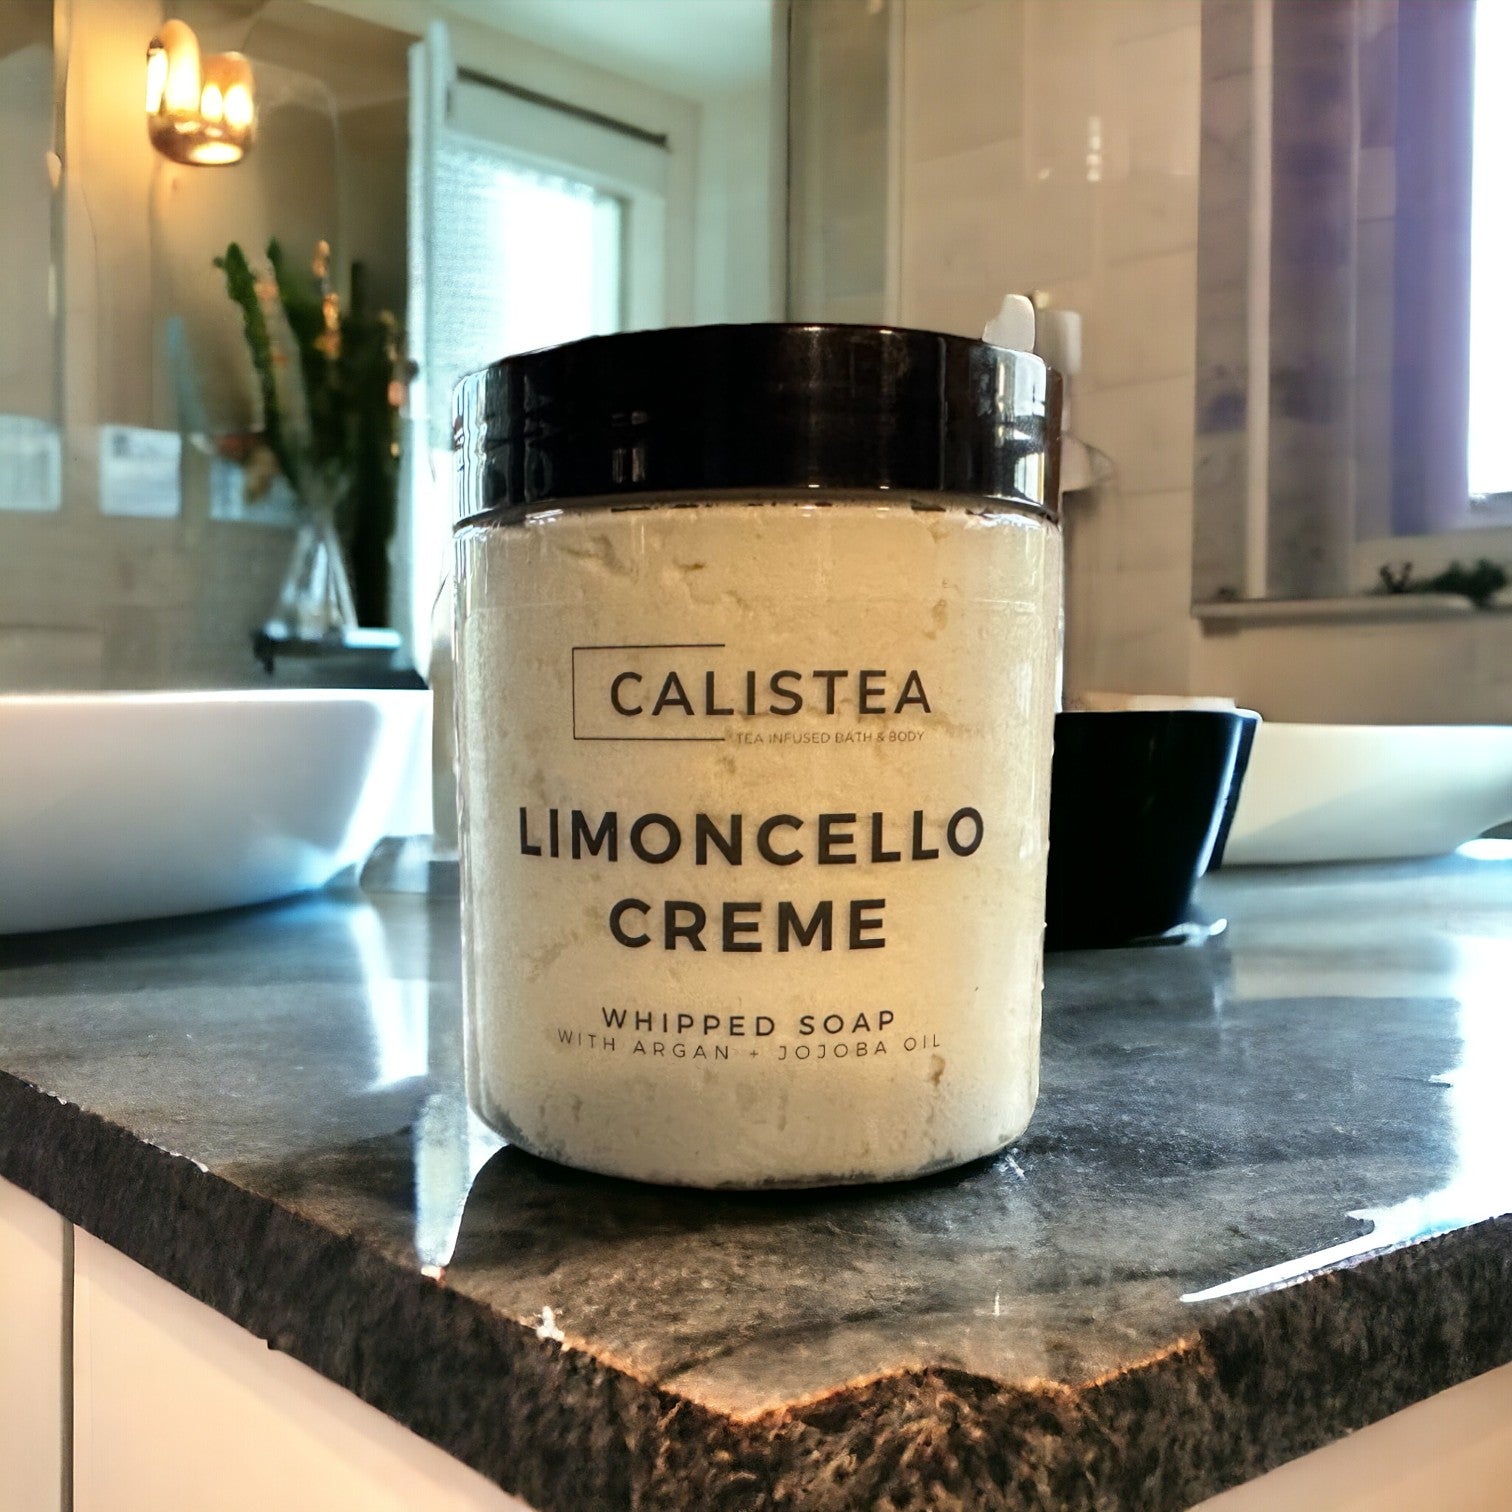 Limoncello Creme - Calistea4 oz by volume